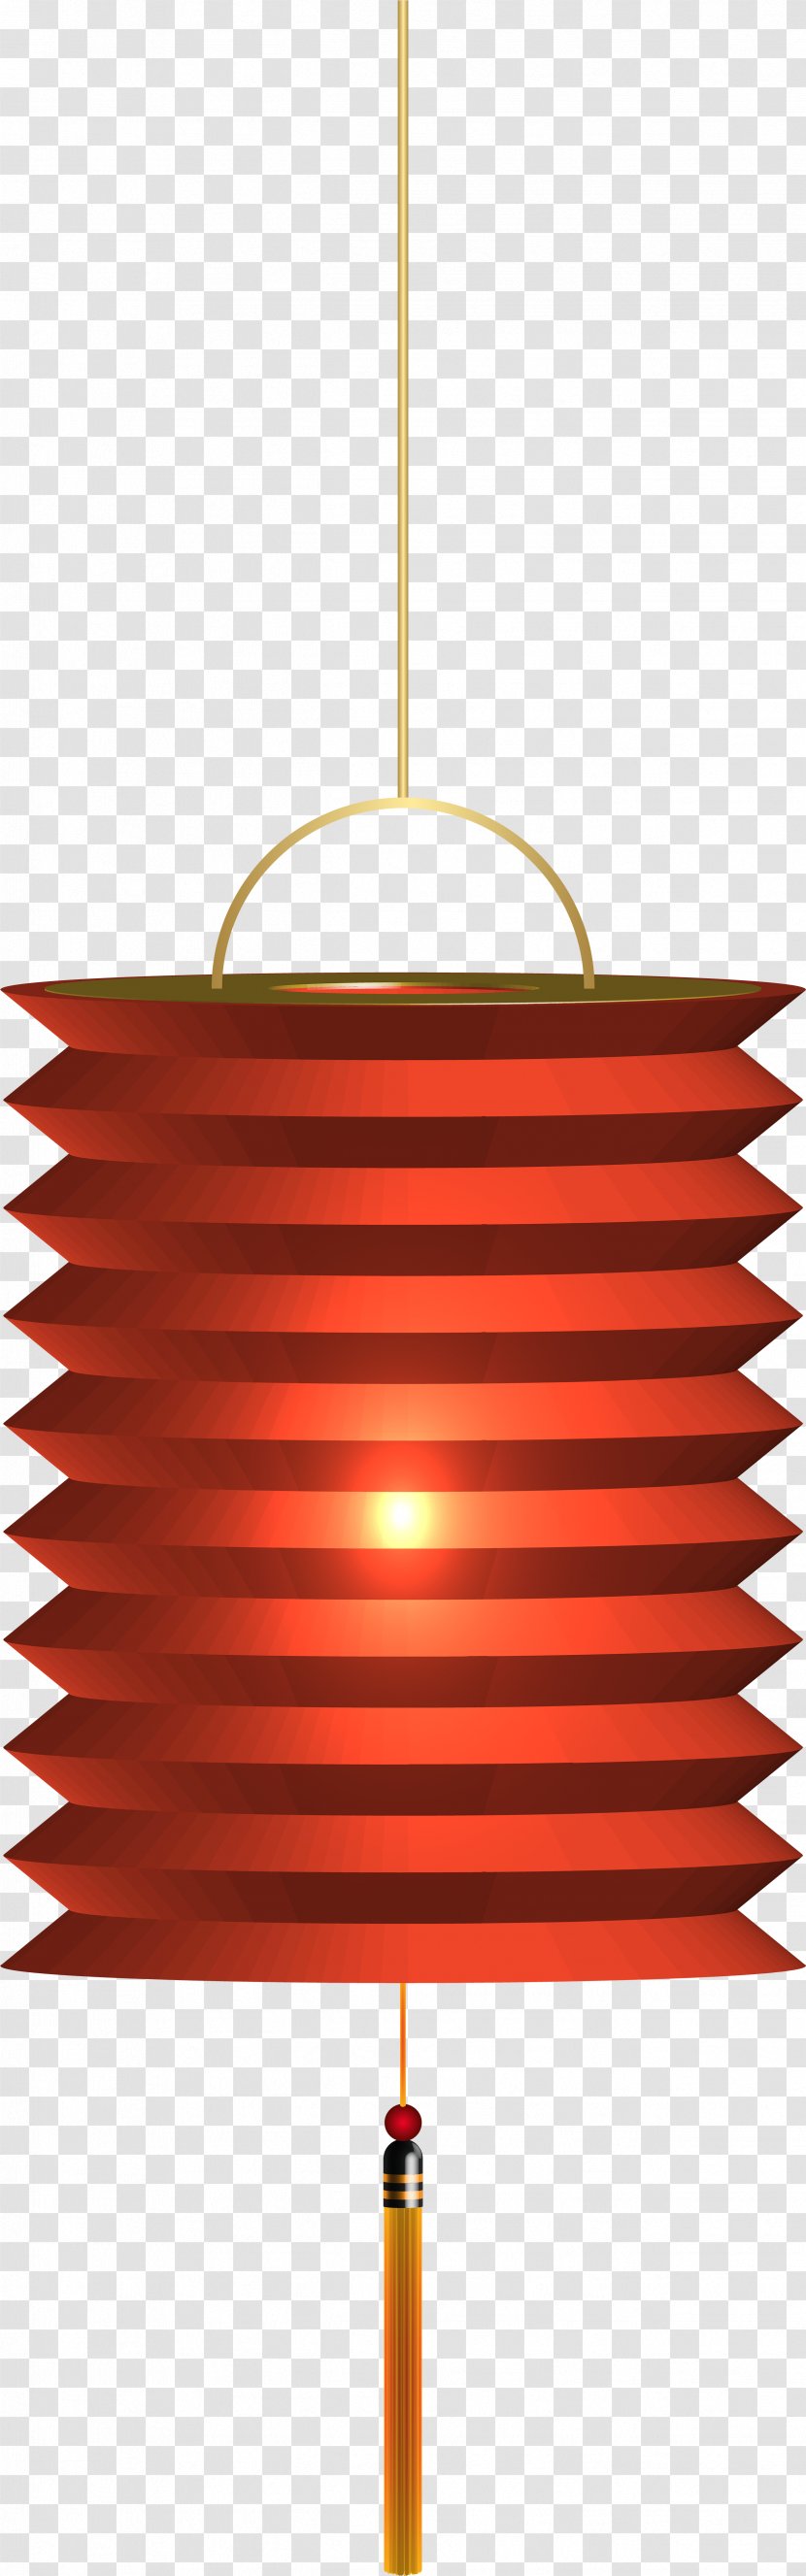 Lantern Festival - Lamp - Rectangle Lampshade Transparent PNG